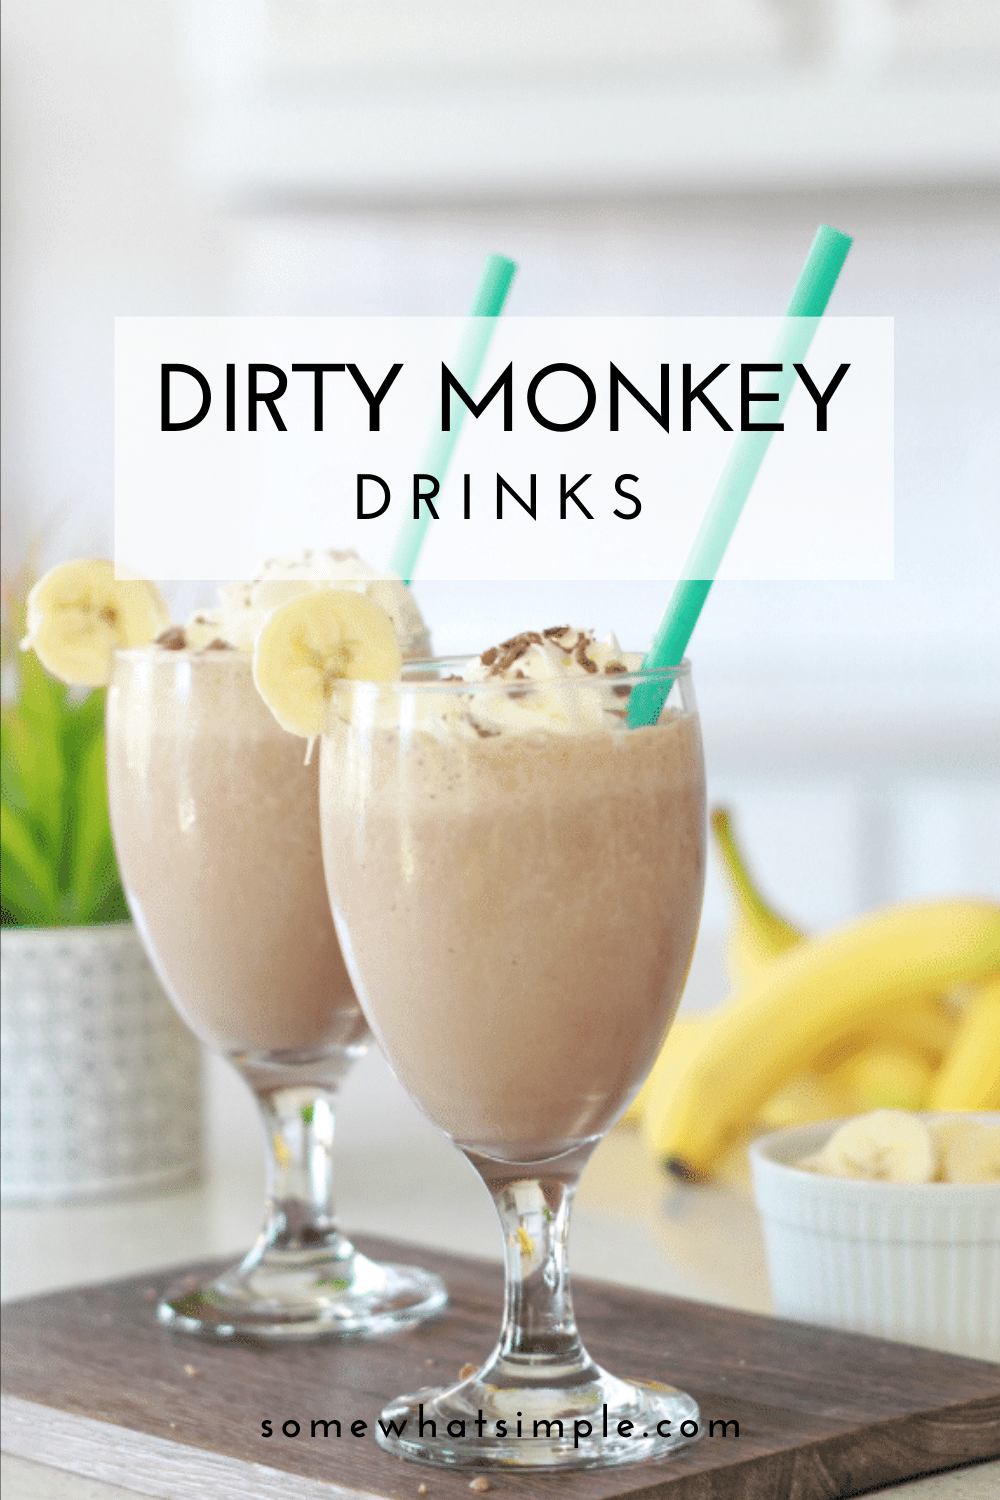 DIRTY MONKEY DRINK RECIPE